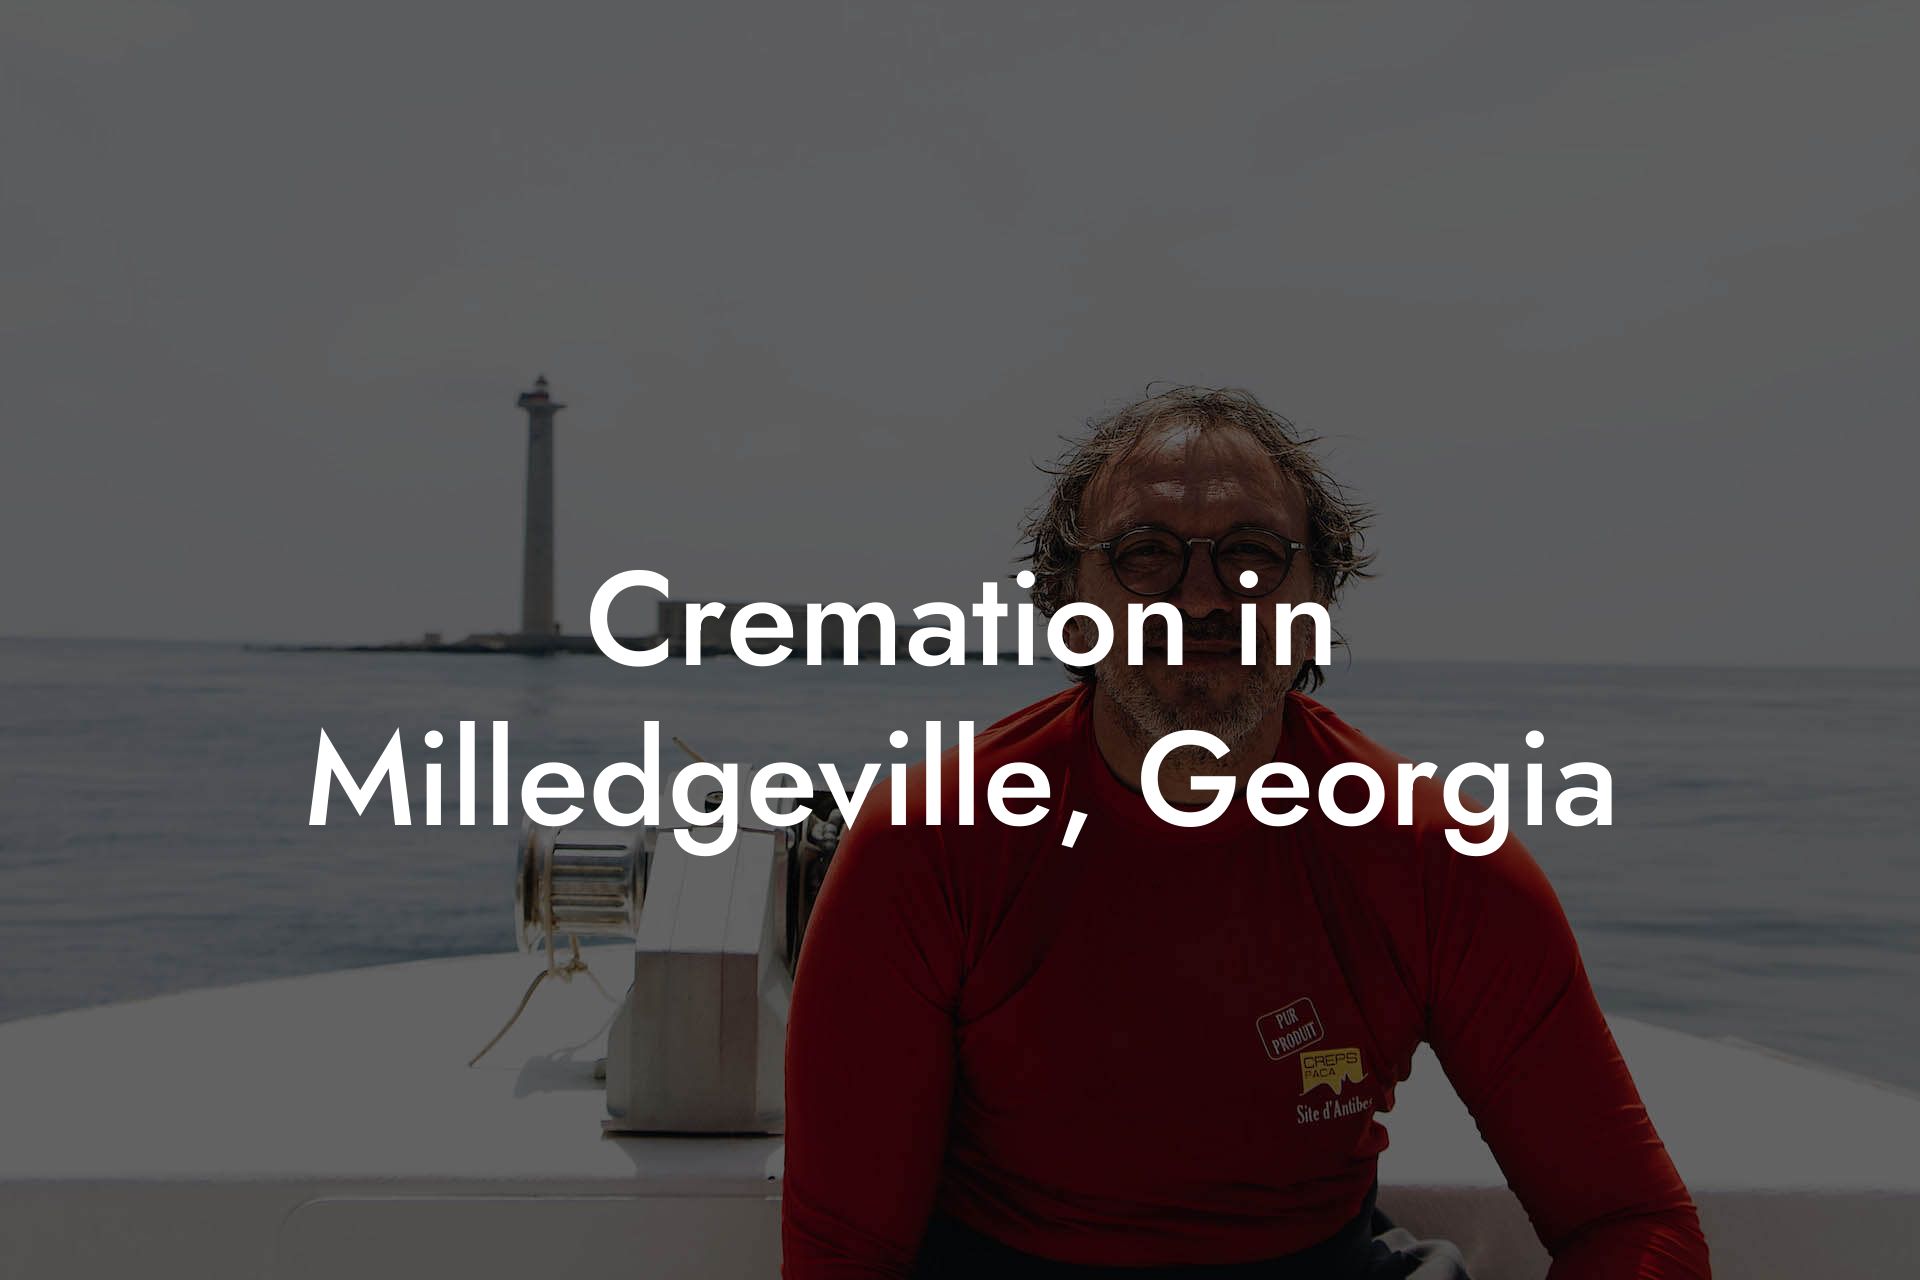 Cremation in Milledgeville, Georgia